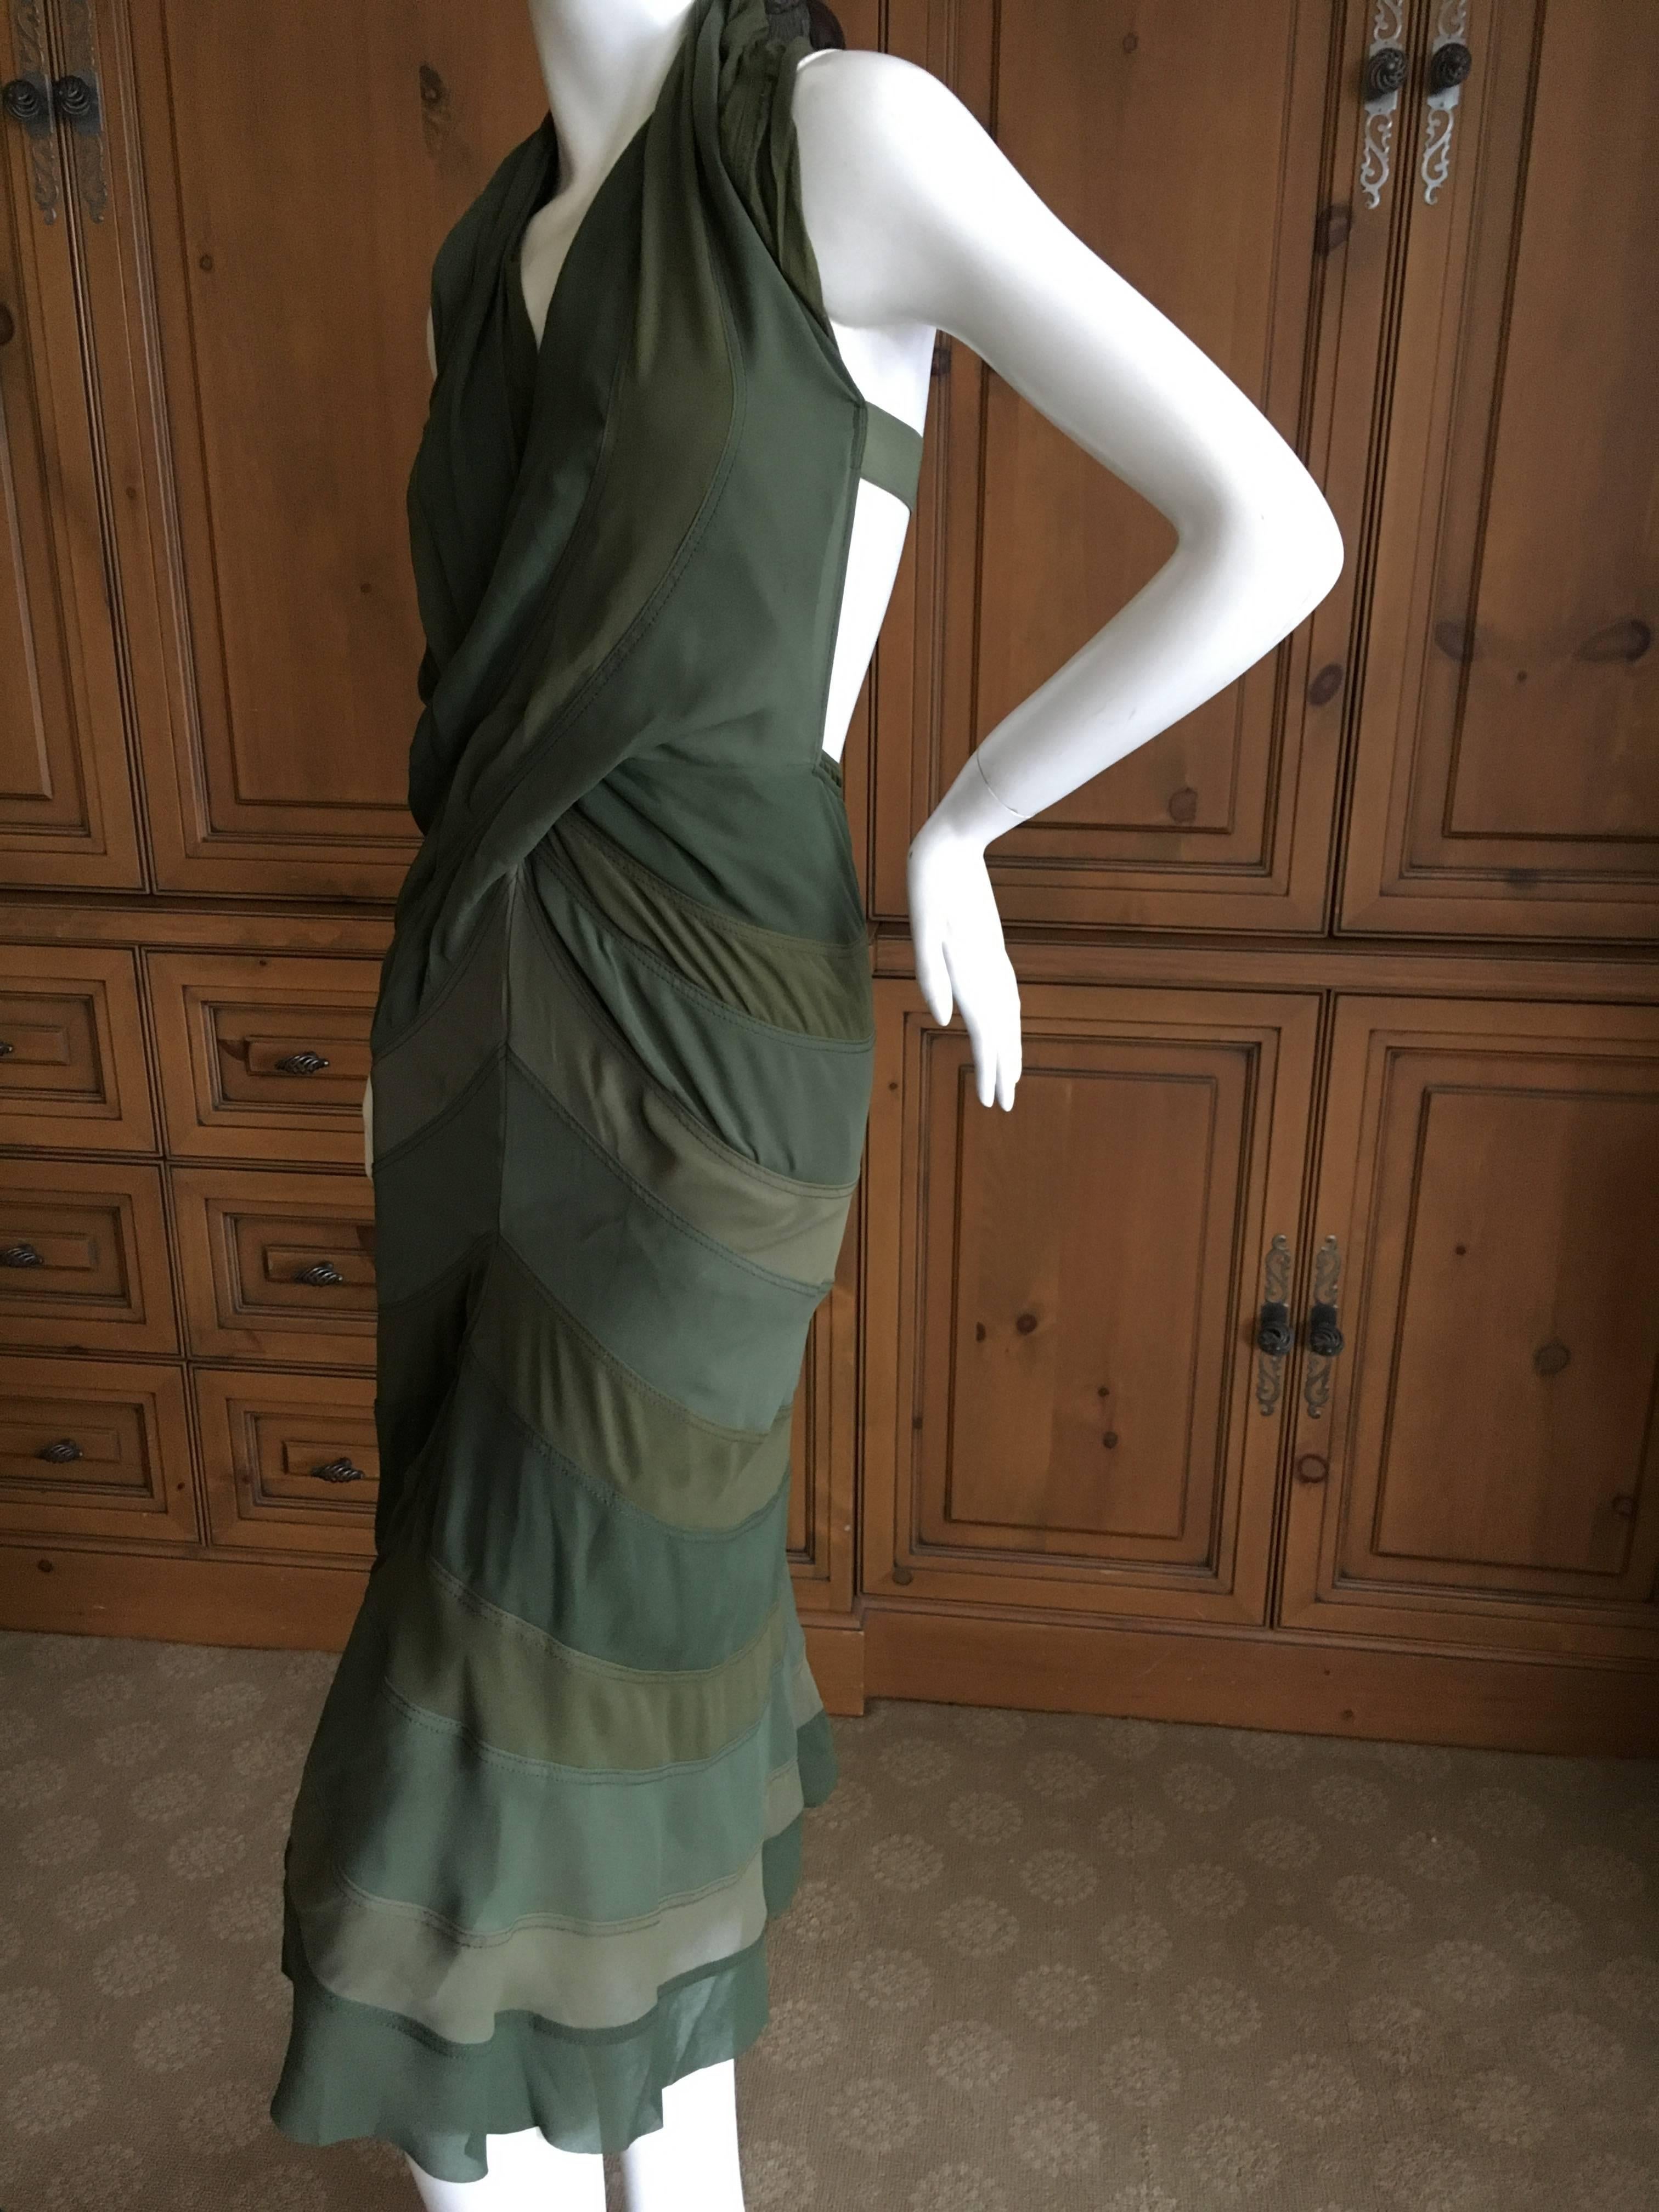 Comme des Garcons Junya Watanabe Gradient Green Dress.
This is such a pretty dress, gradient shades of green.
XS
Bust 34"
Waist 26"
Hips 36"
Length 48"
